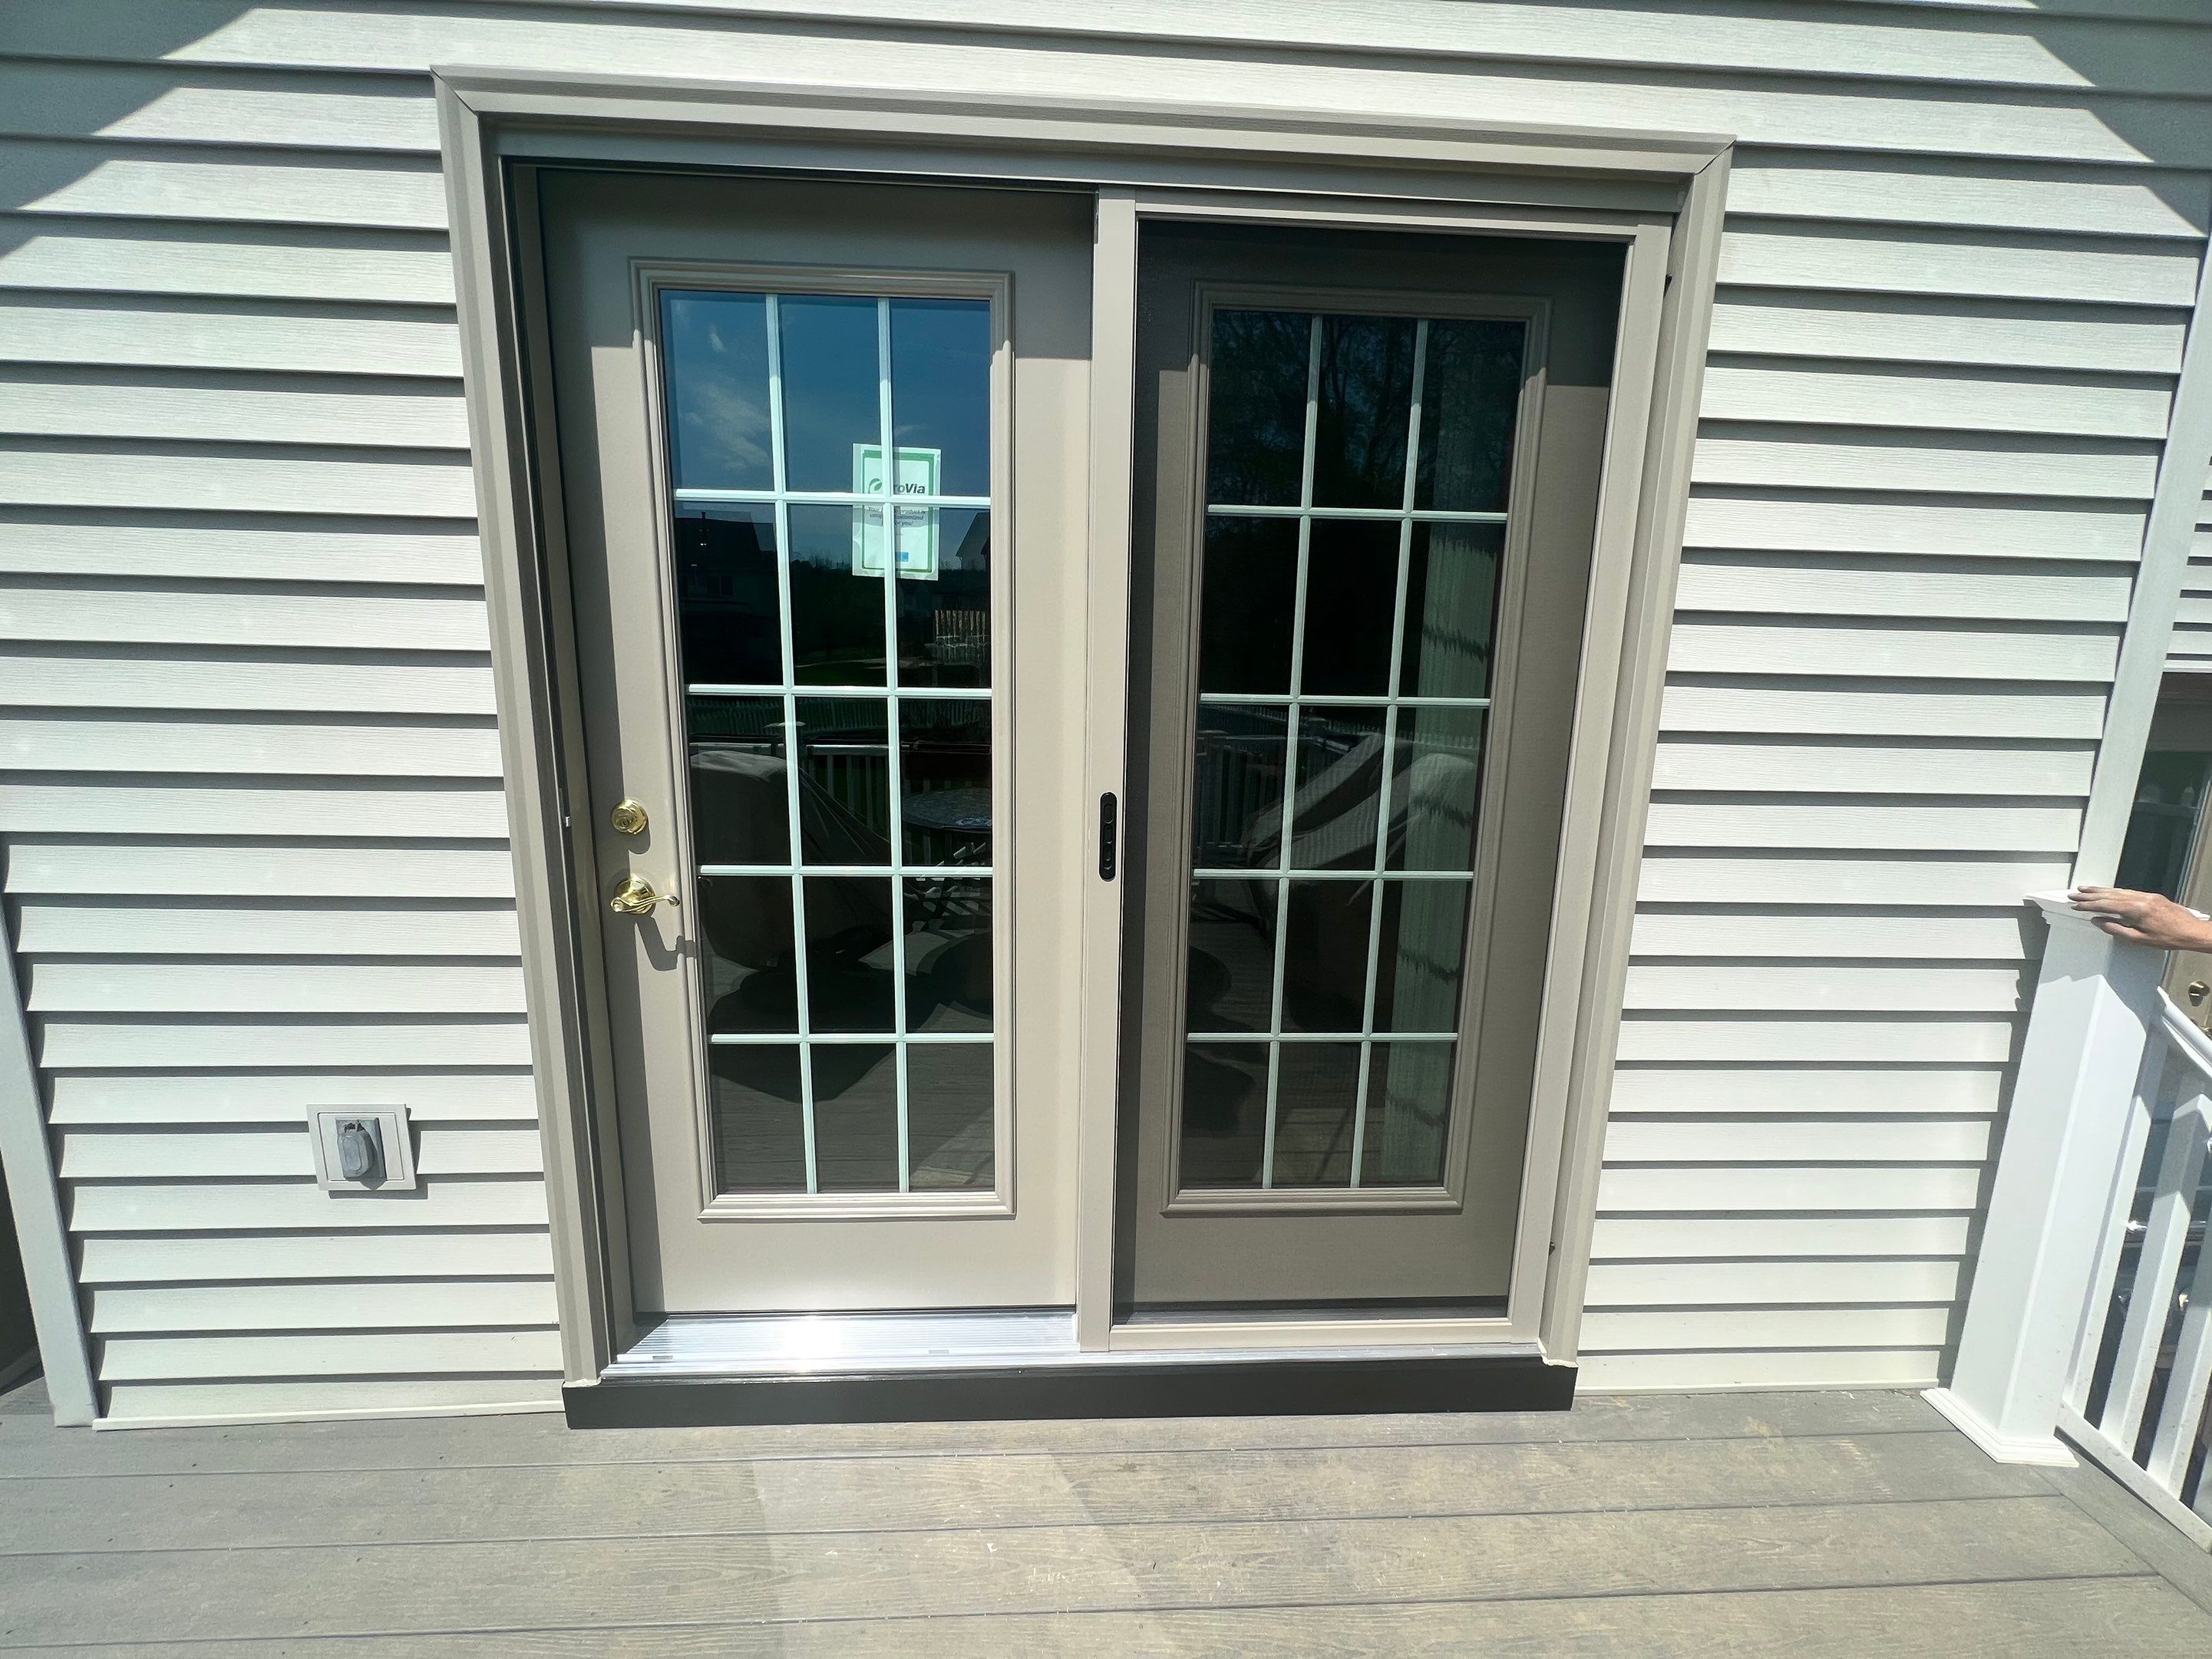 New Patio Door in Greensburg by Mt. Pleasant Window & Remodeling